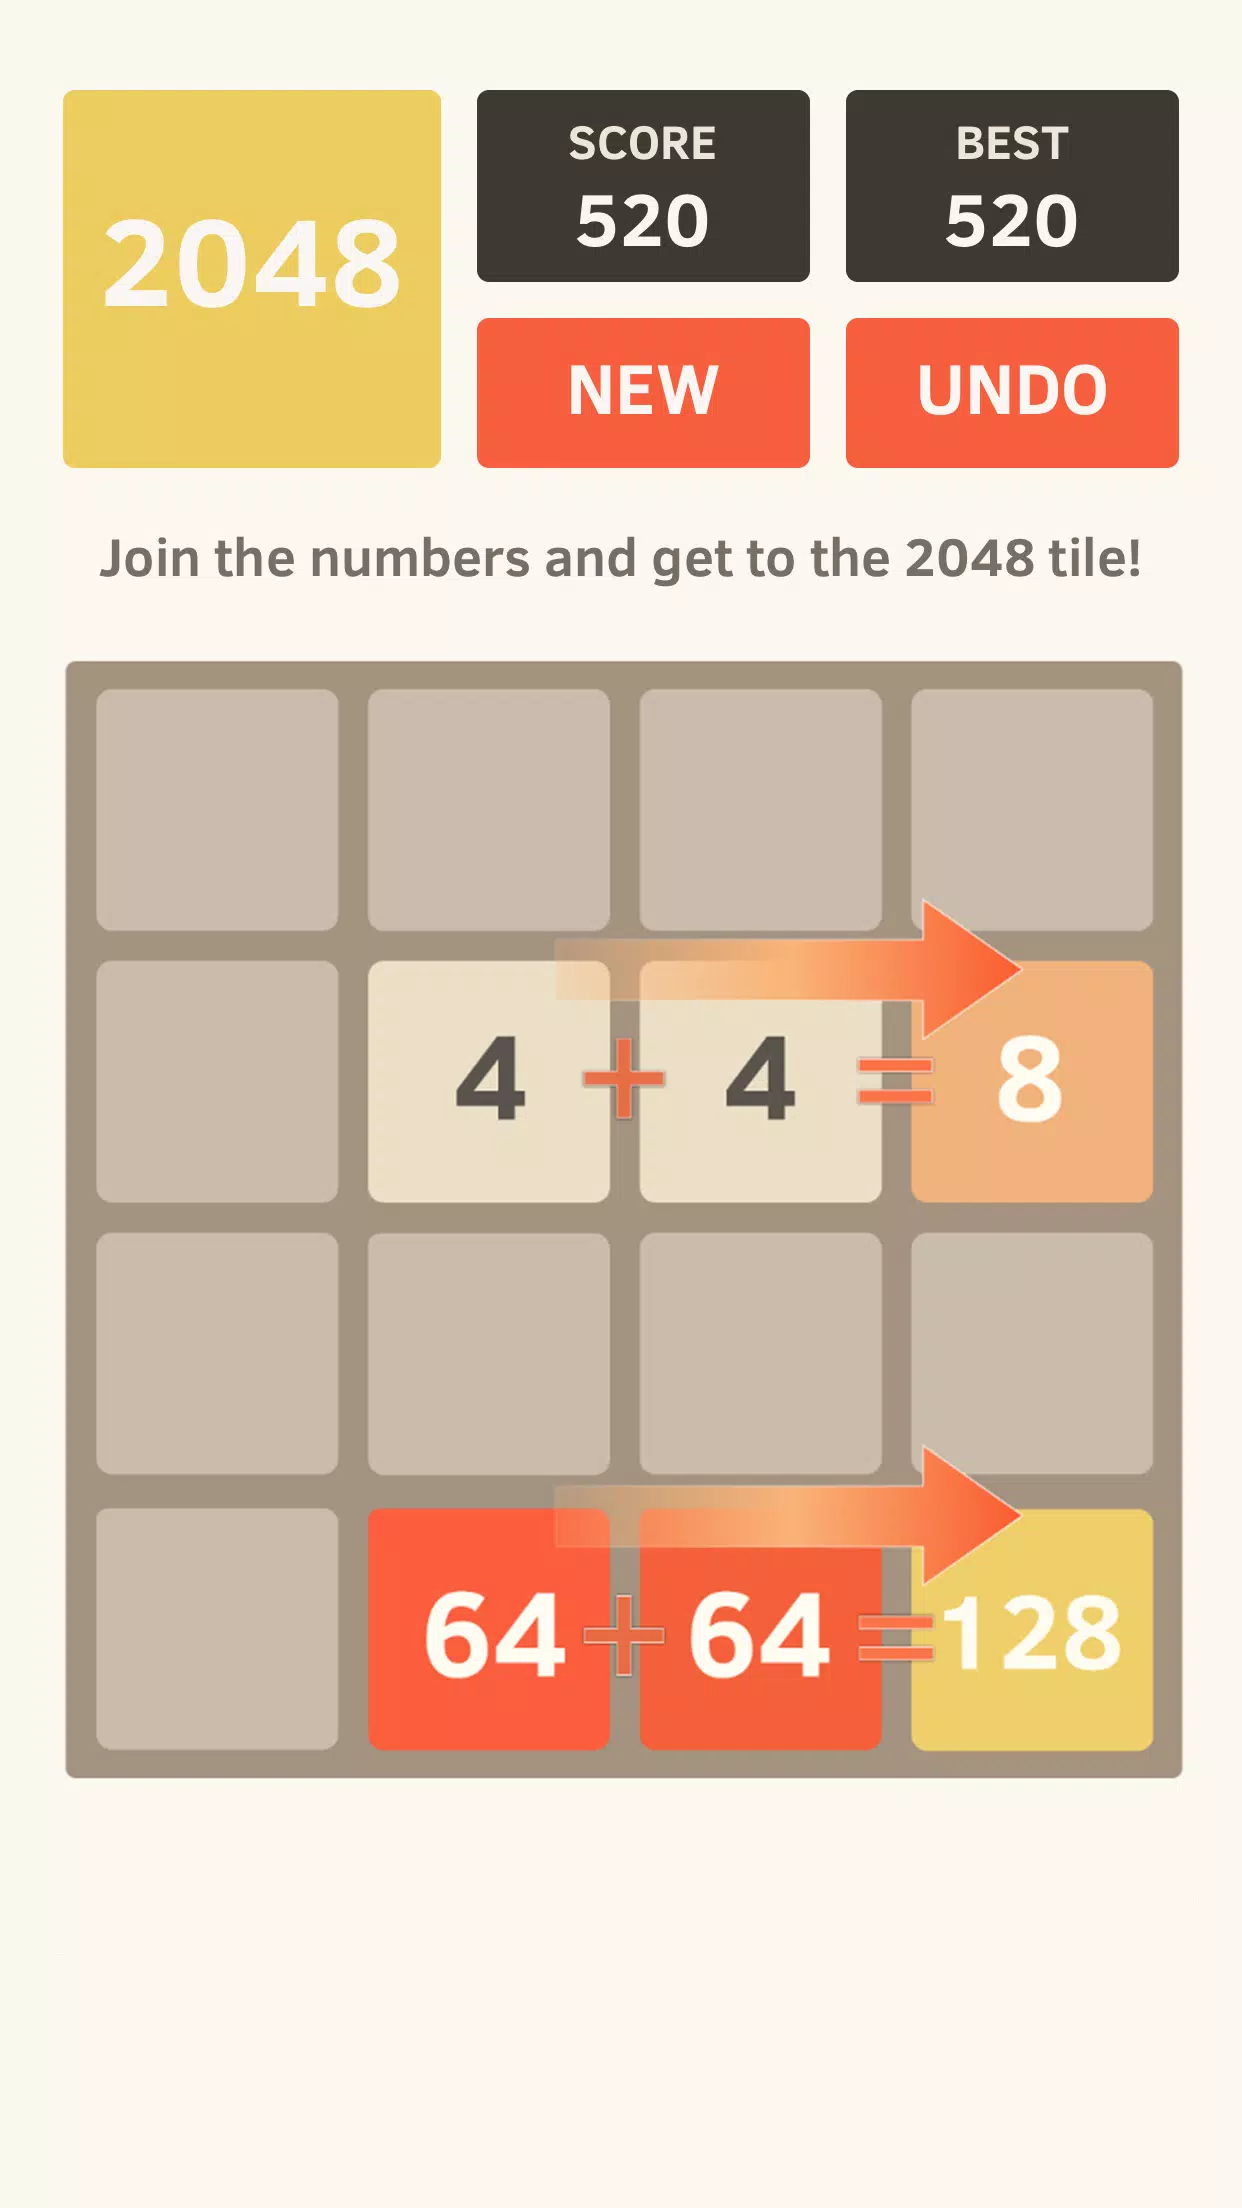 2048 Game APK para Android - Download